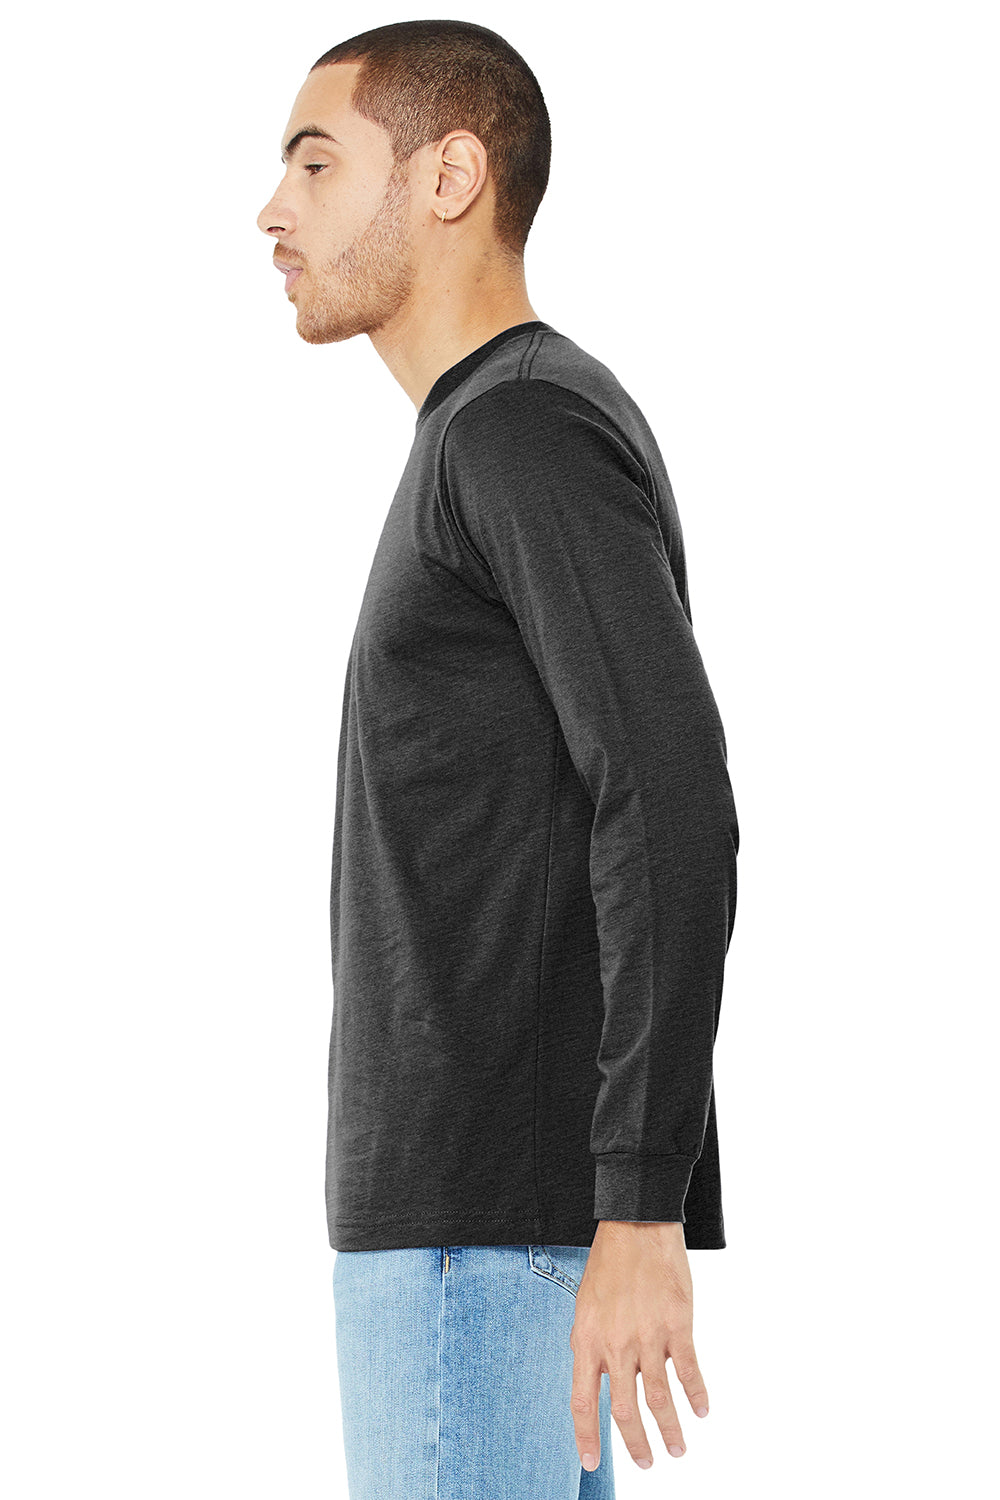 Bella + Canvas BC3501/3501 Mens Jersey Long Sleeve Crewneck T-Shirt Charcoal Black Triblend Model Side